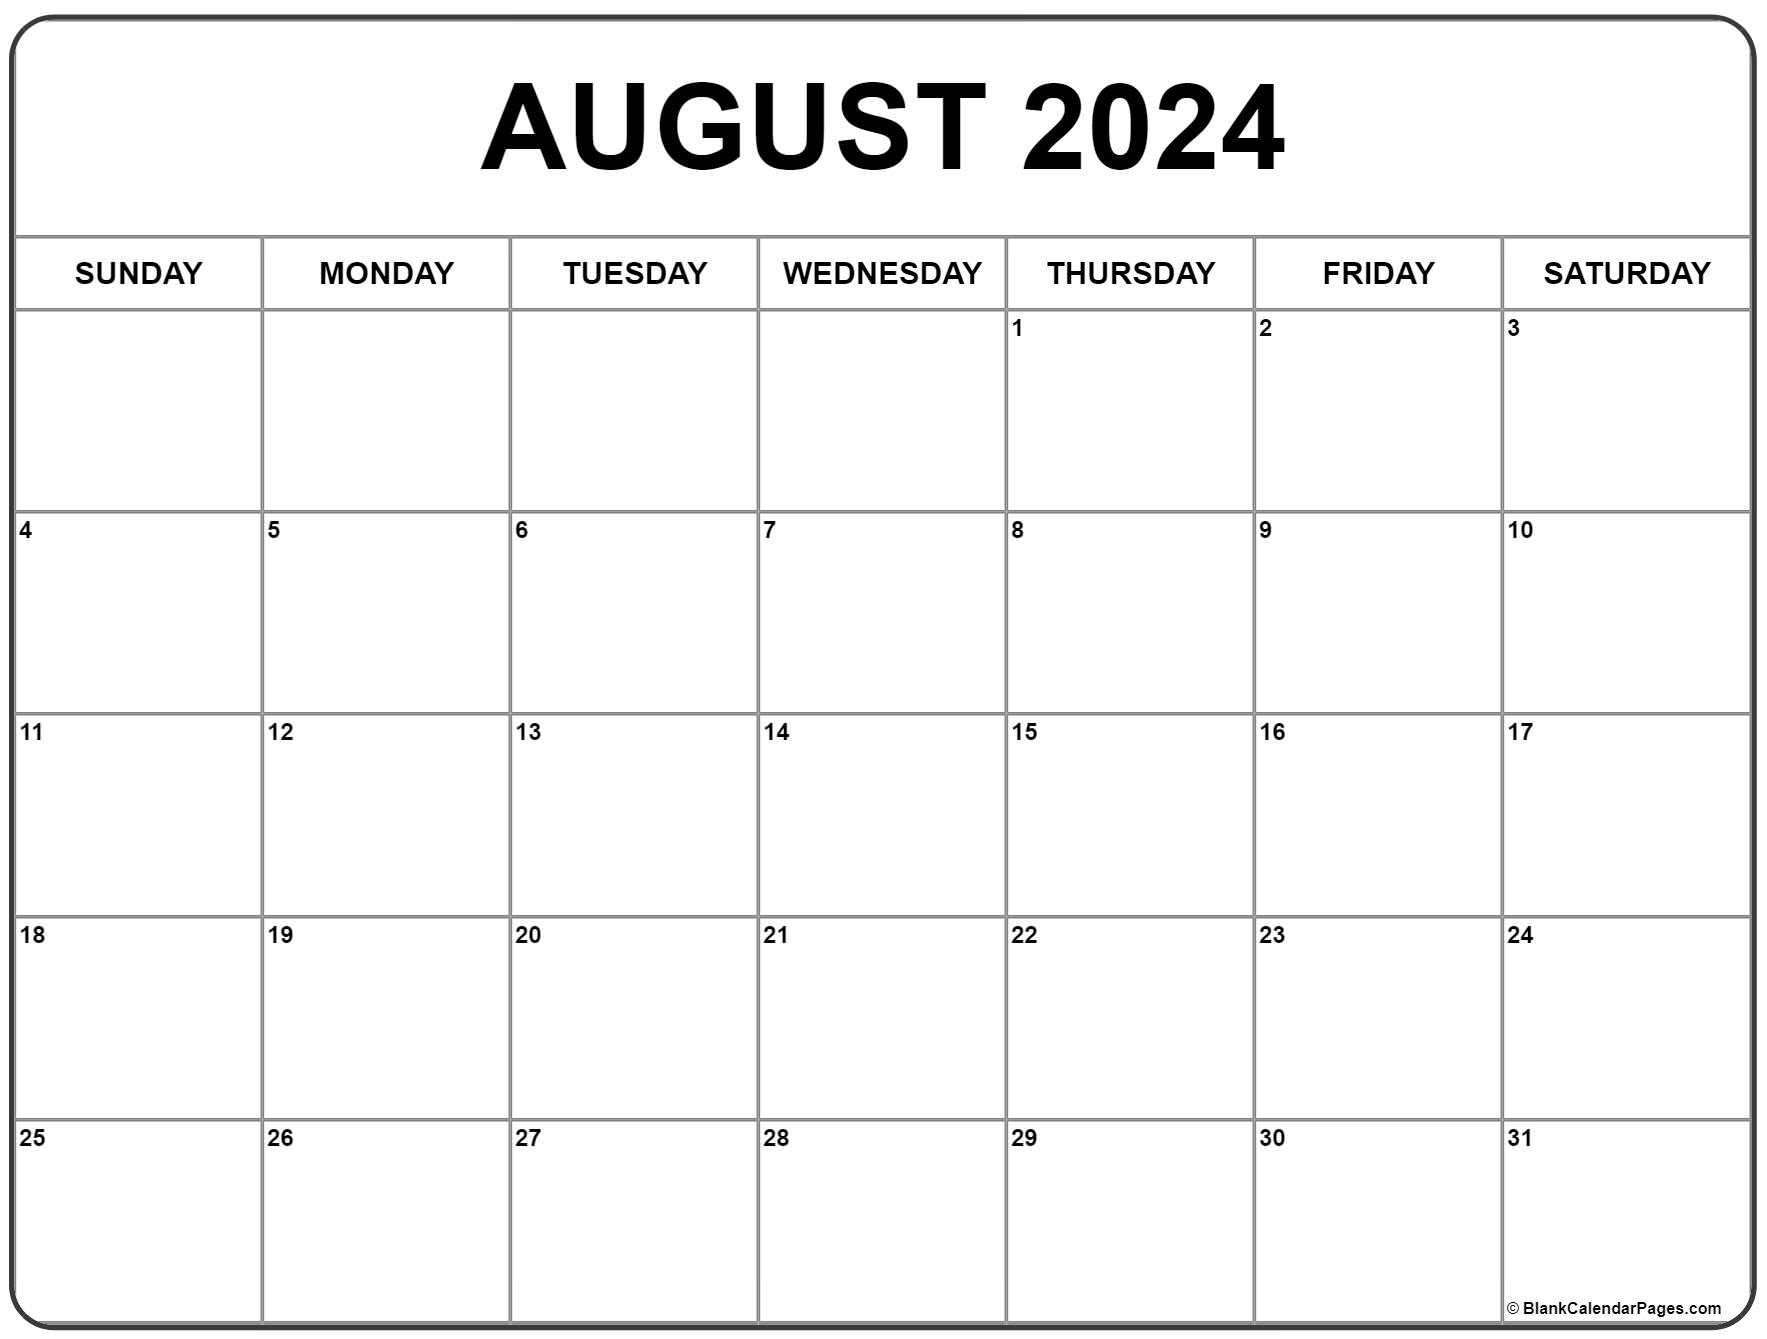 August 2024 Calendar | Free Printable Calendar for Blank August 2024 Calendar Printable